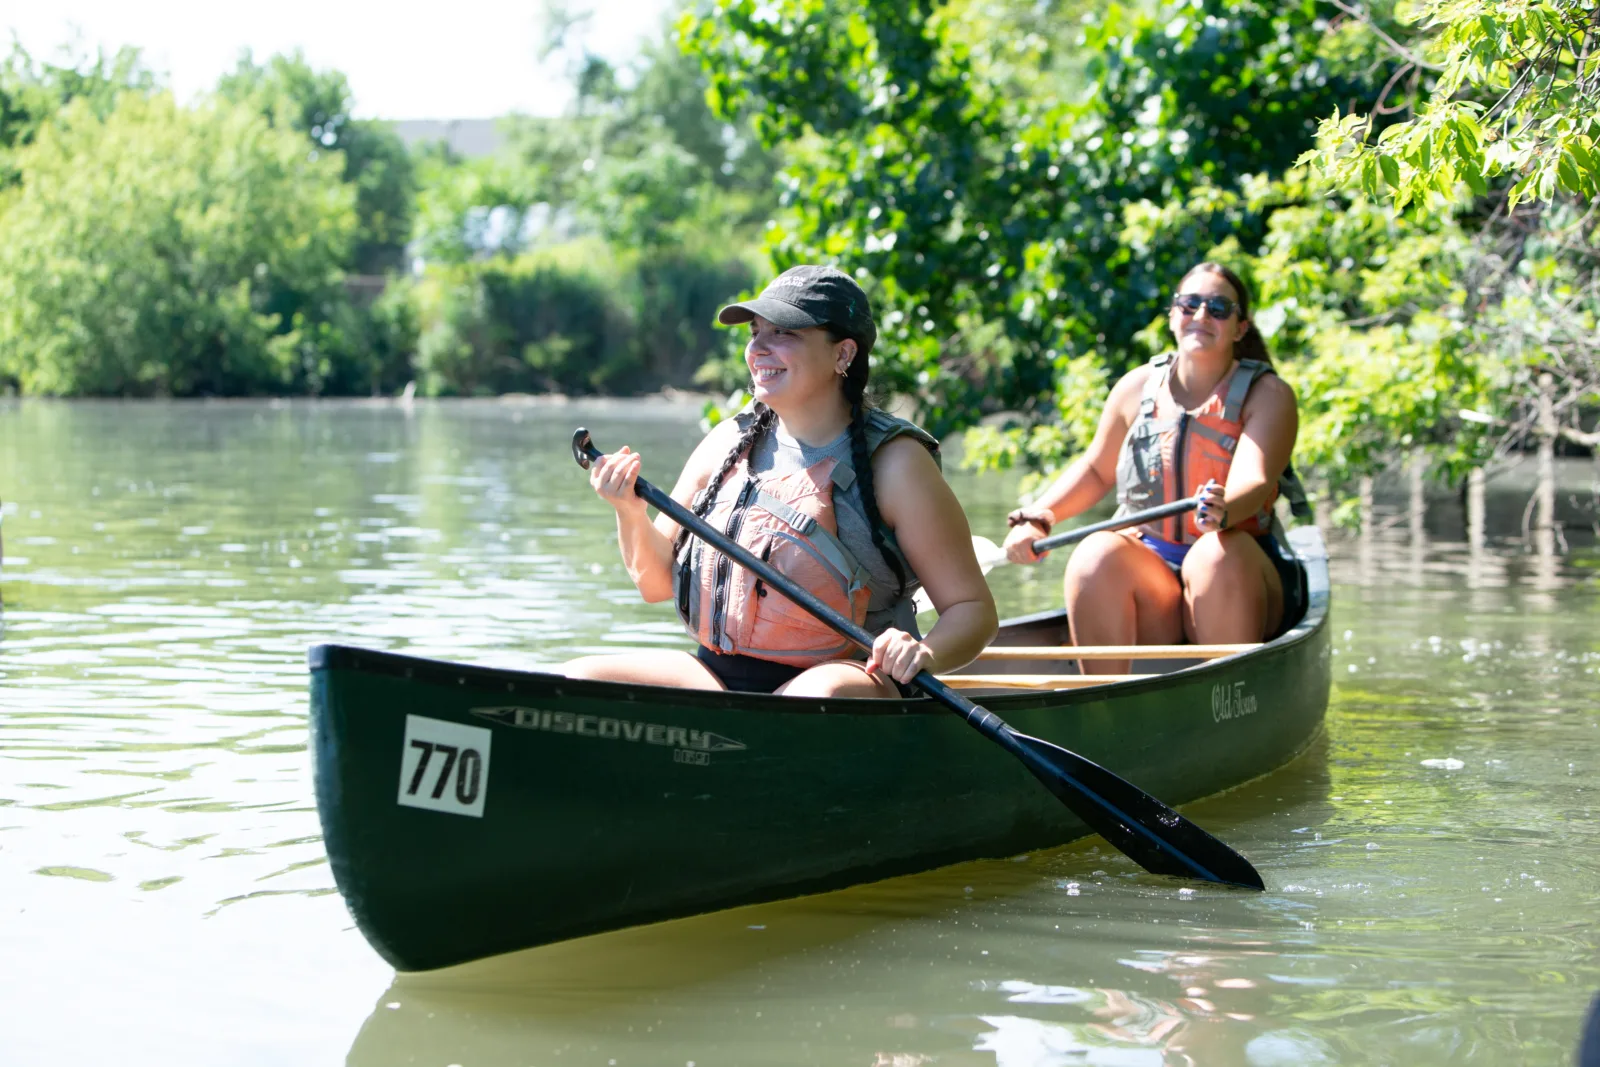 Smiling NCAIS participants paddle down the Chicago River.